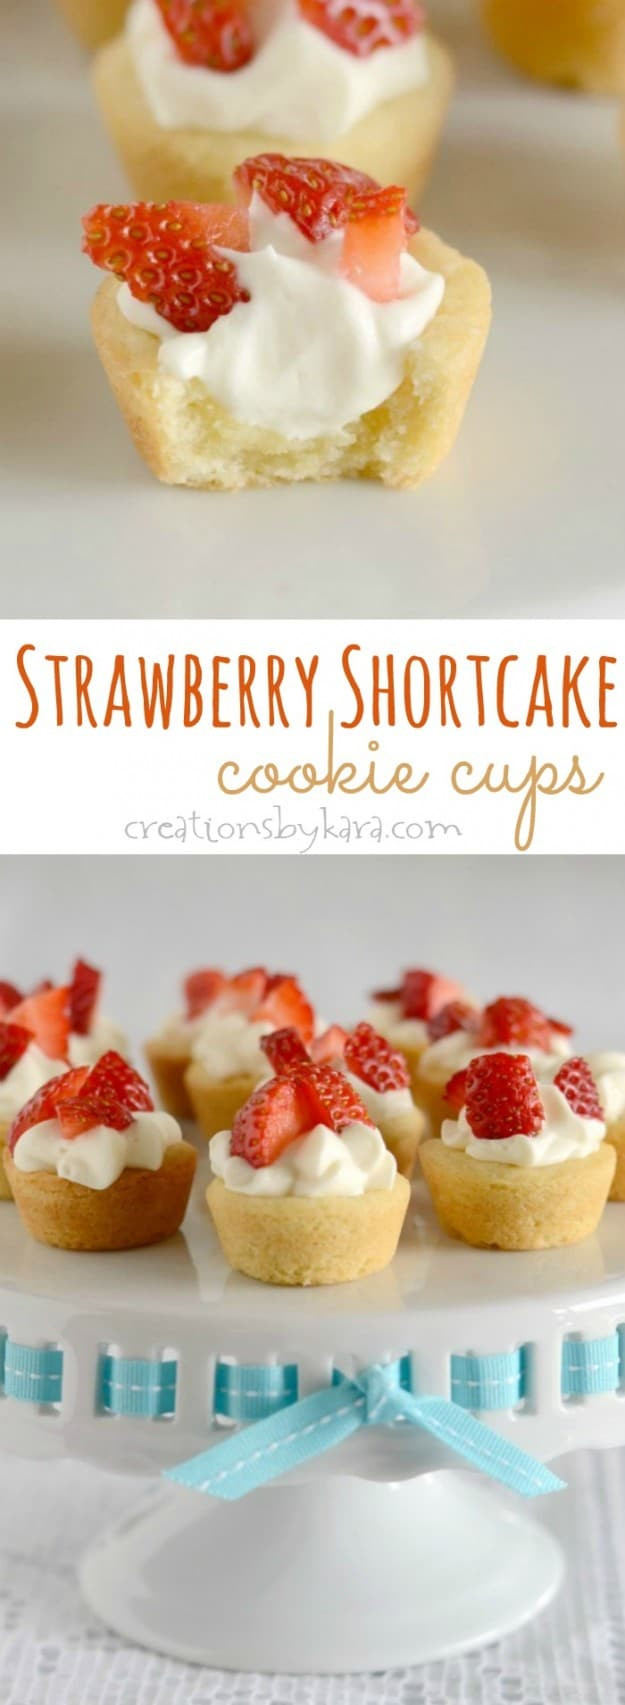 Strawberry Shortcake Cups
 Mini strawberry shortcake cups